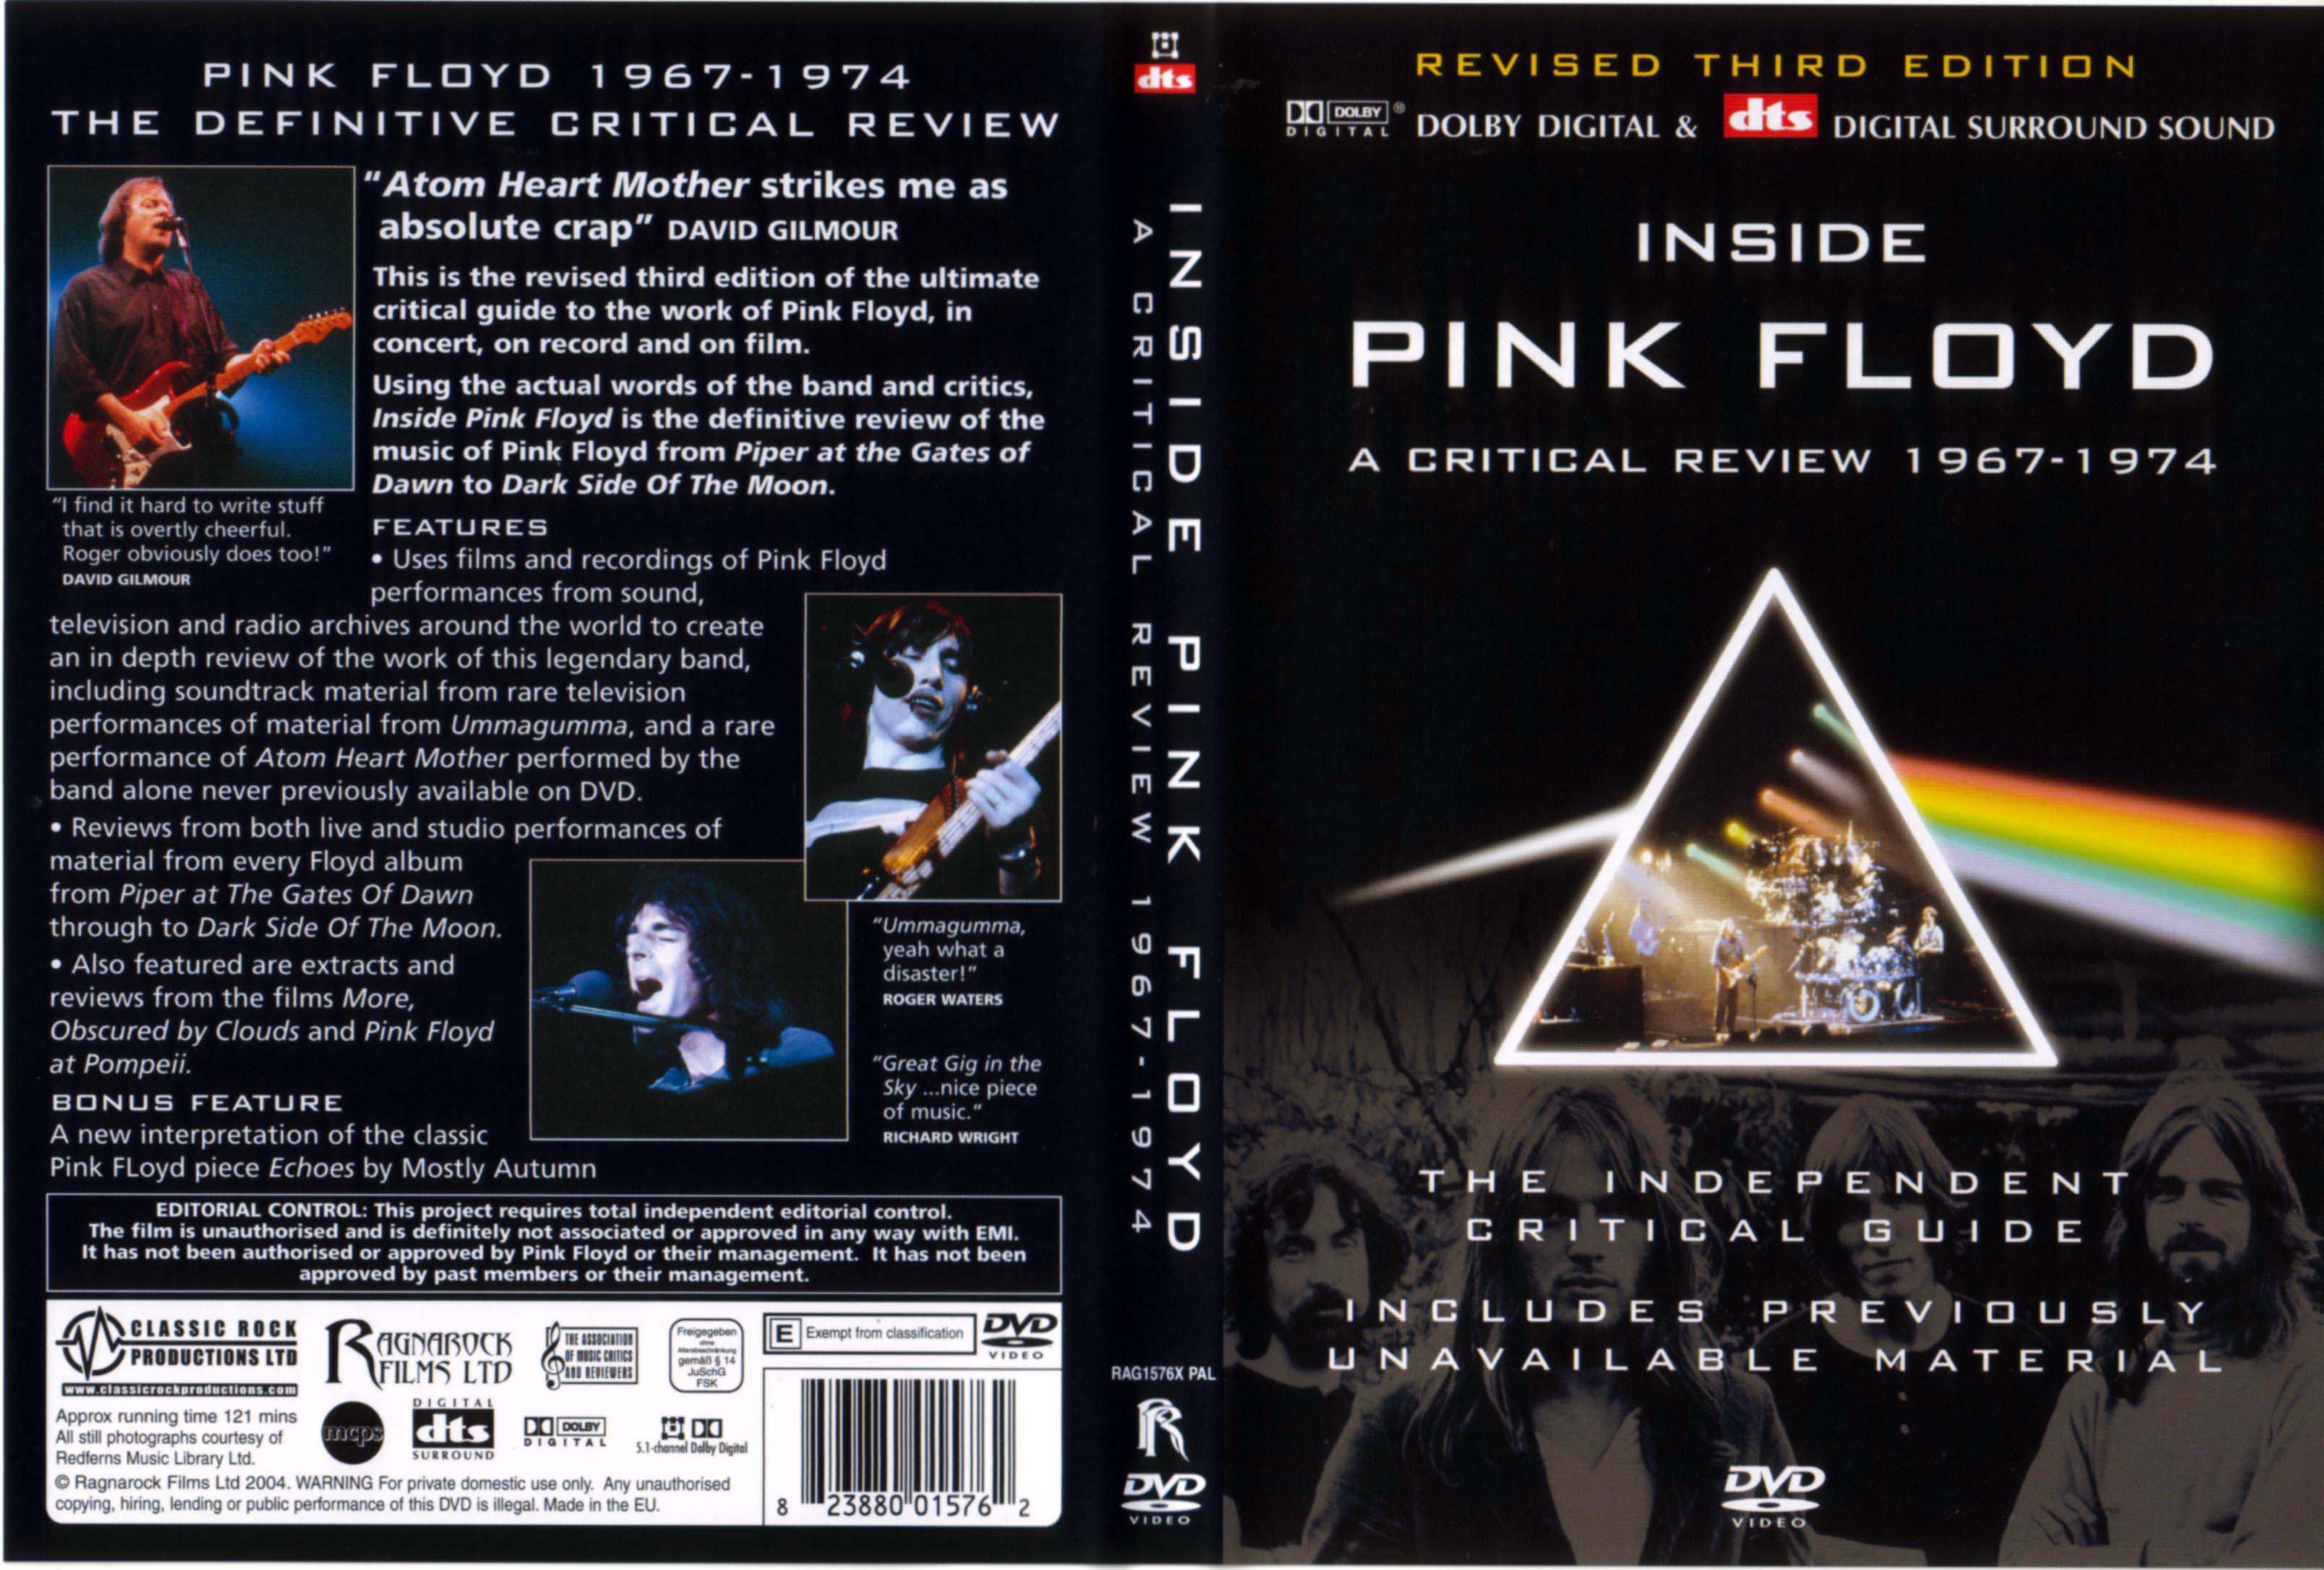 Jaquette DVD Inside Pink Floyd A Critical Review 1967-1974